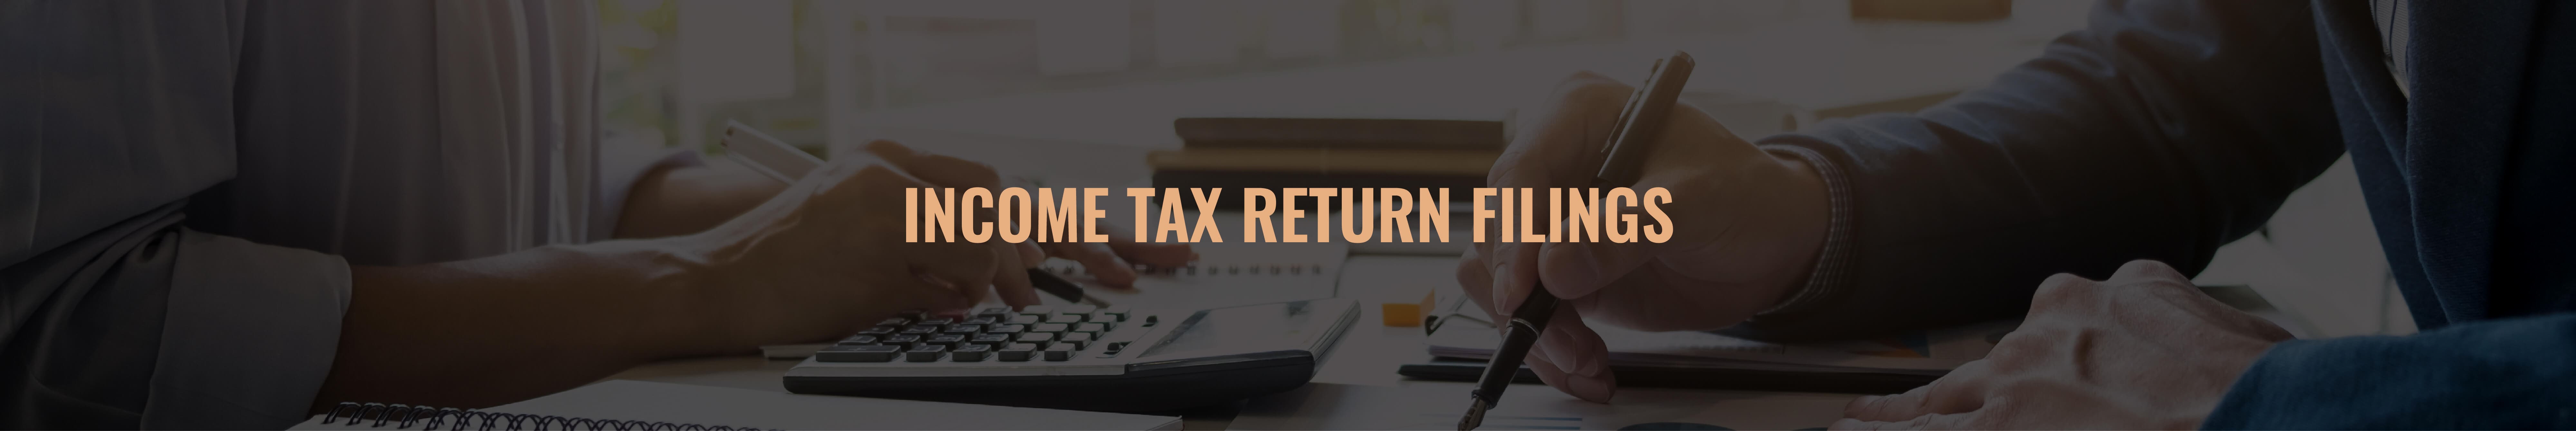 Income Tax Return Filings